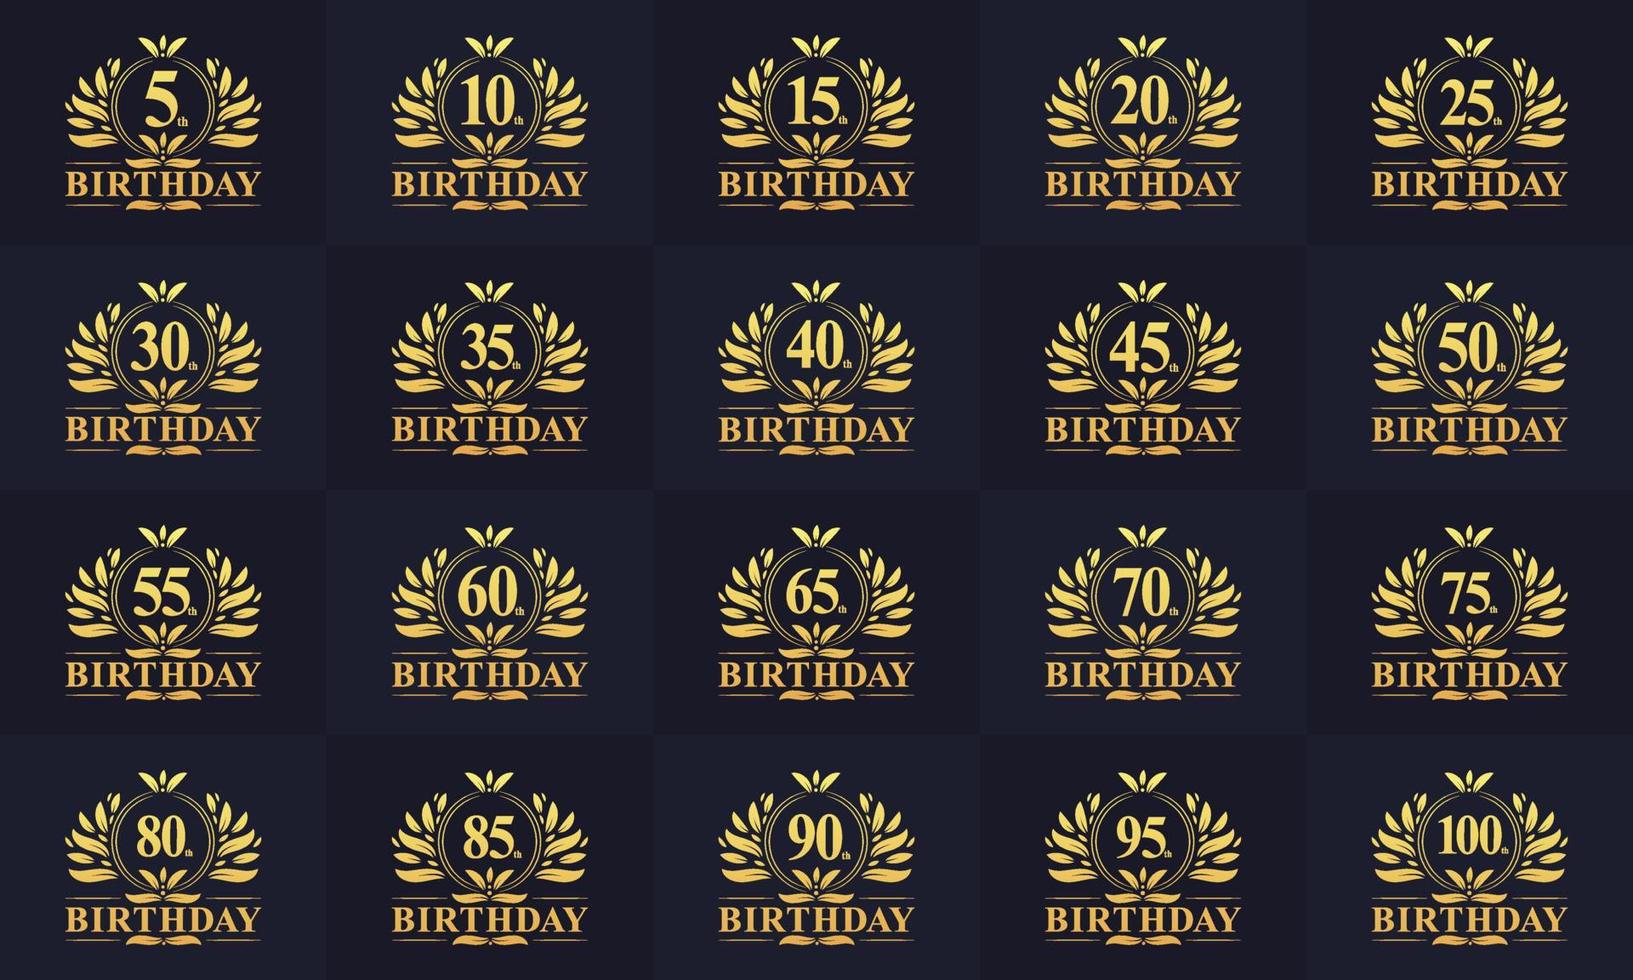 alles gute zum geburtstag logo bündel. Retro-Vintage-Geburtstags-Logo-Set. 5., 10., 15., 20., 25., 30., 35., 40., 45., 50. Geburtstagsfeier-Logo-Paket. vektor